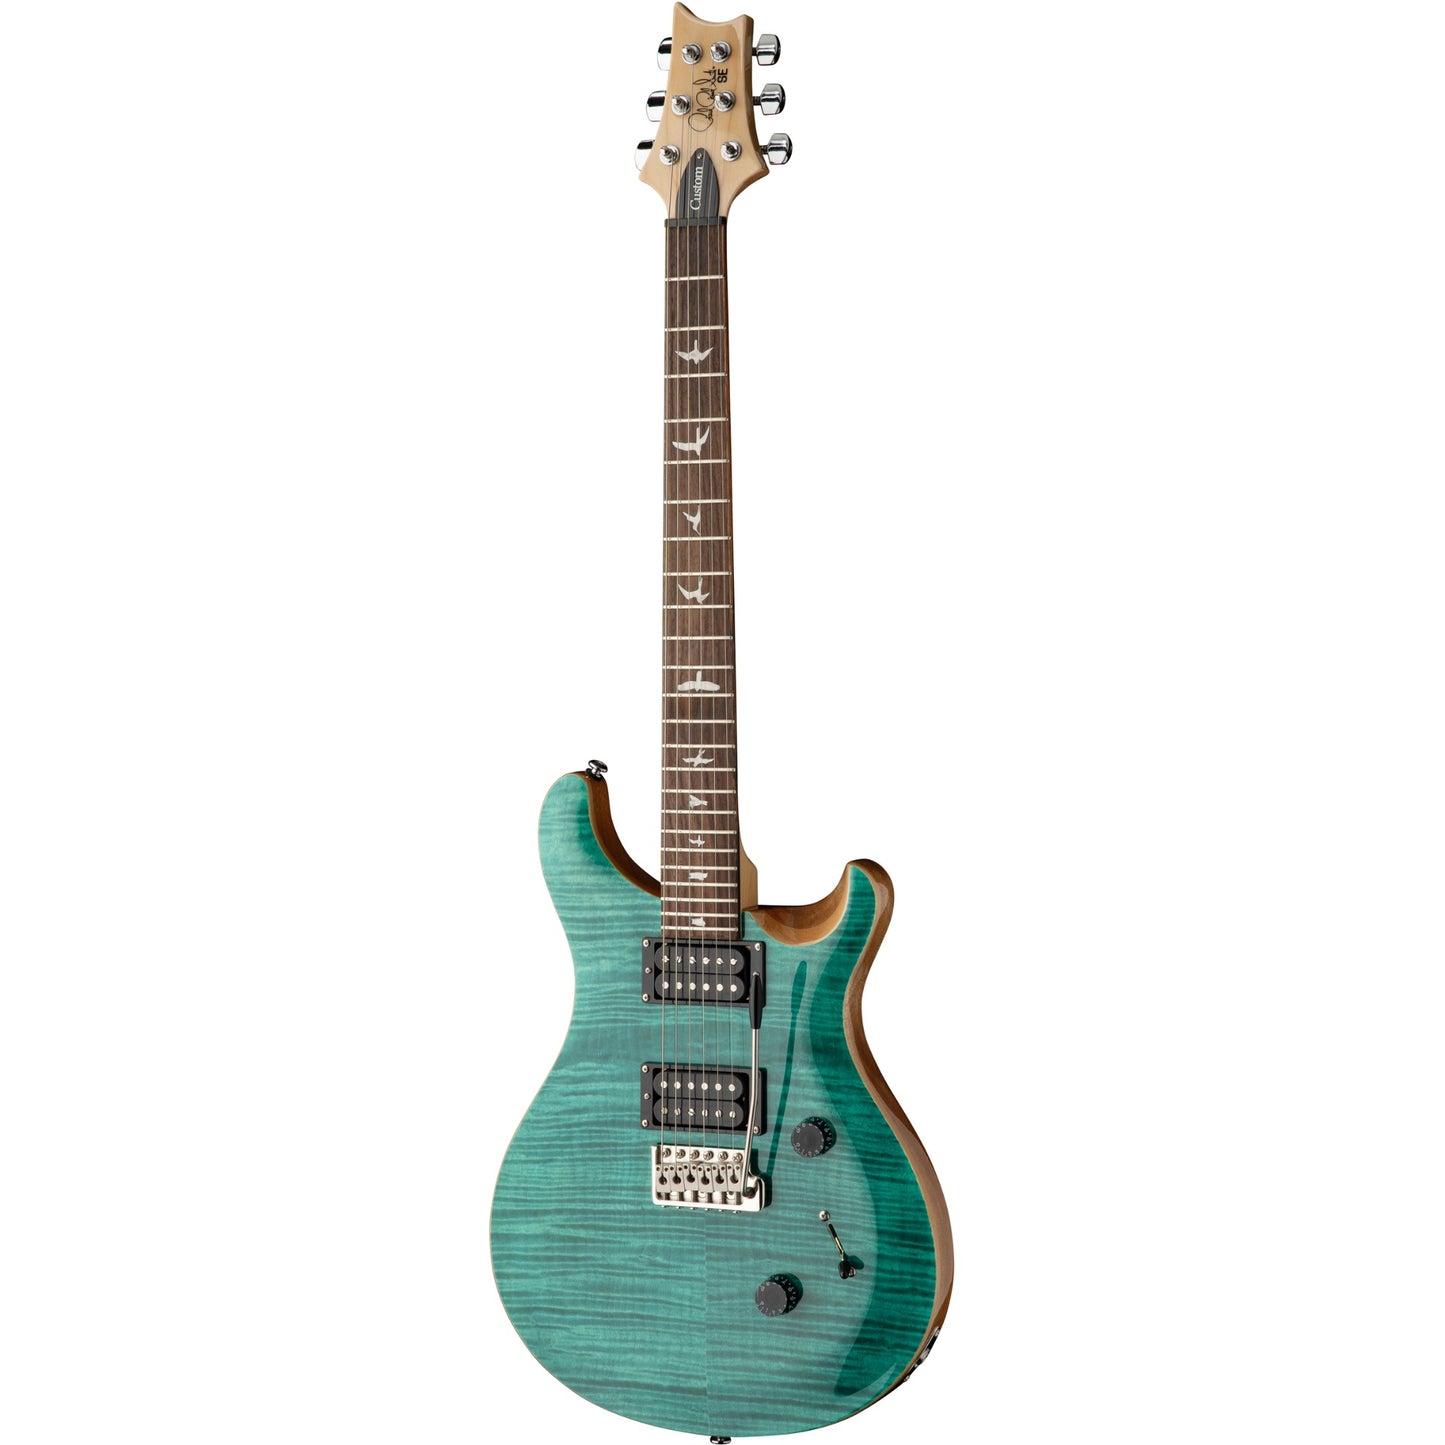 PRS SE Custom 24 Electric Guitar - Turquoise